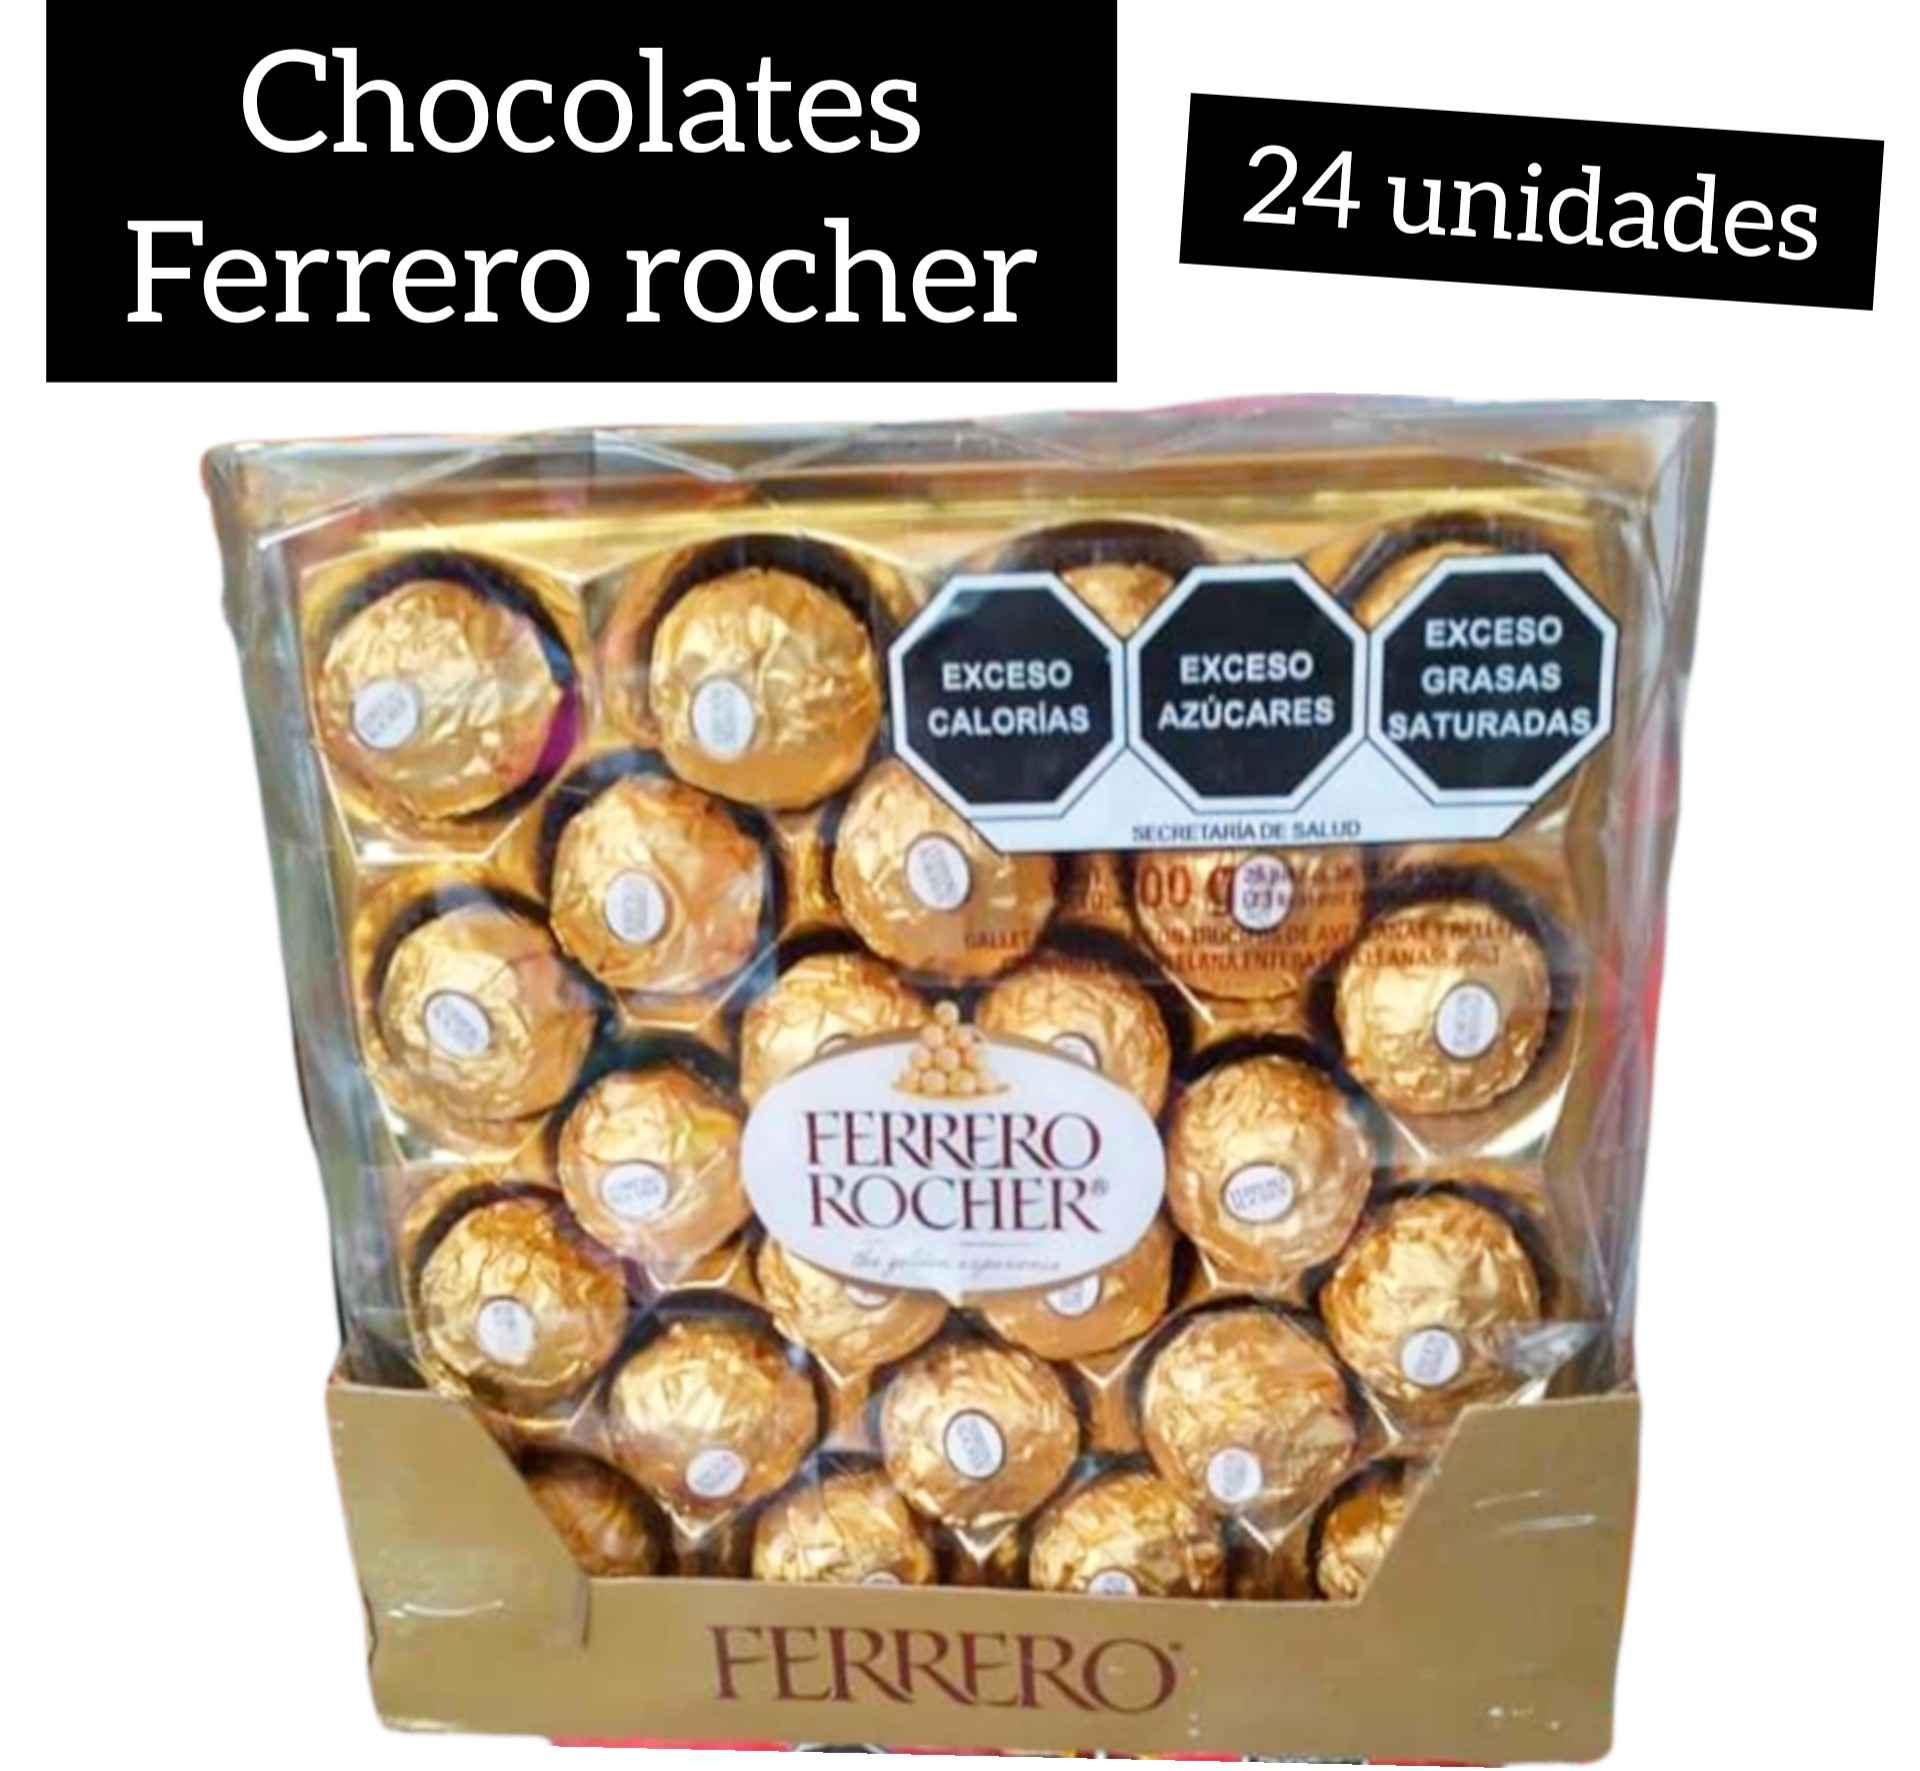 Chocolates ferrero rocher de 24 unidades